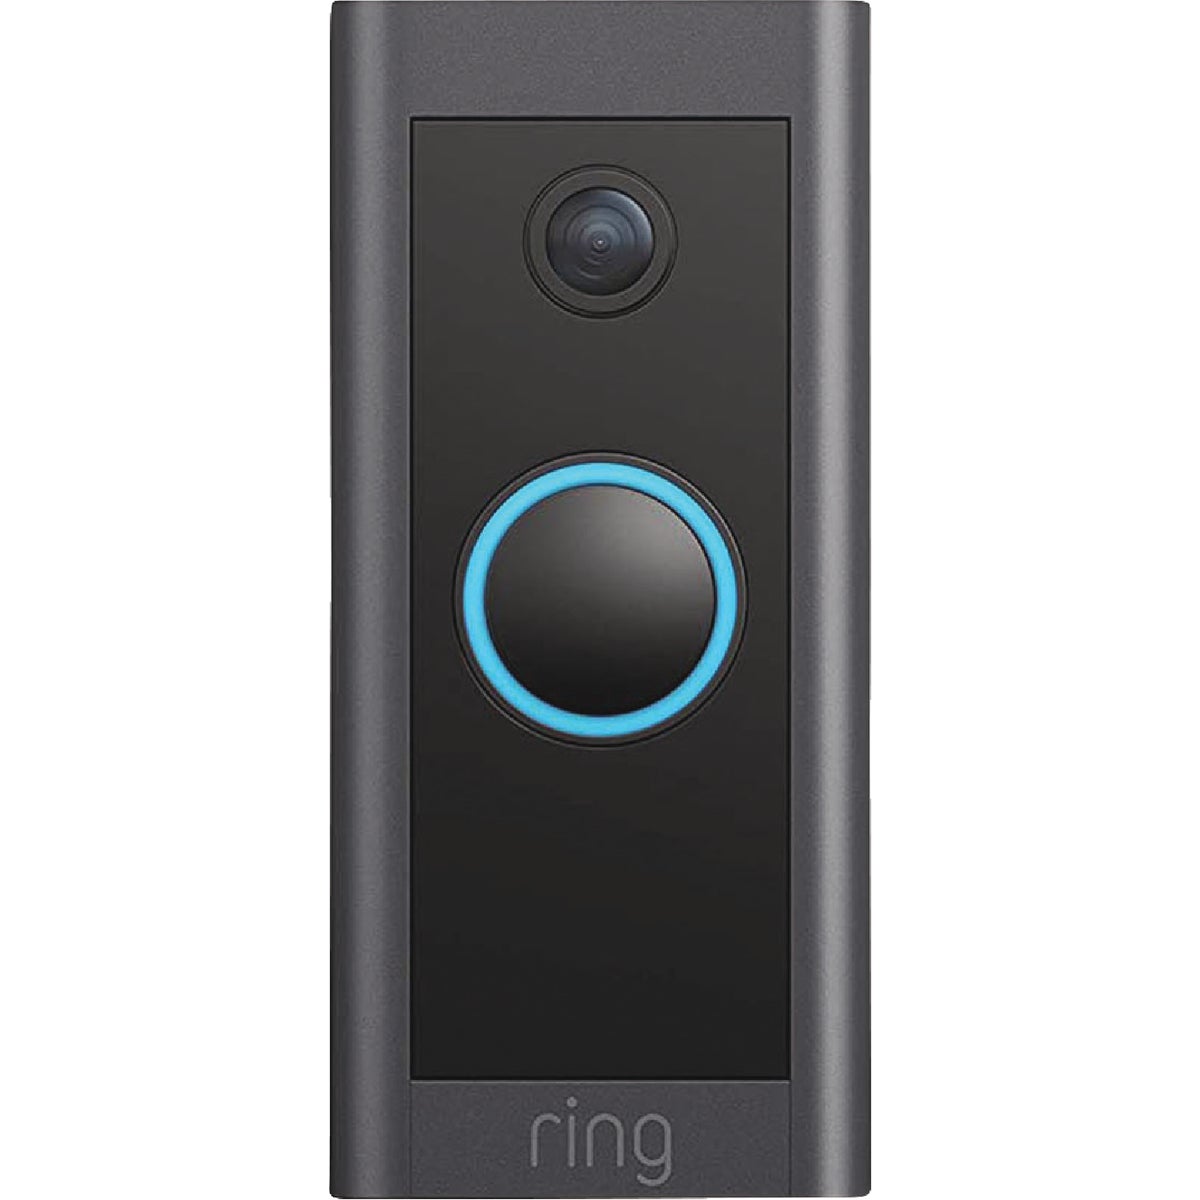 Ring Black Hardwired WiFi Video Doorbell